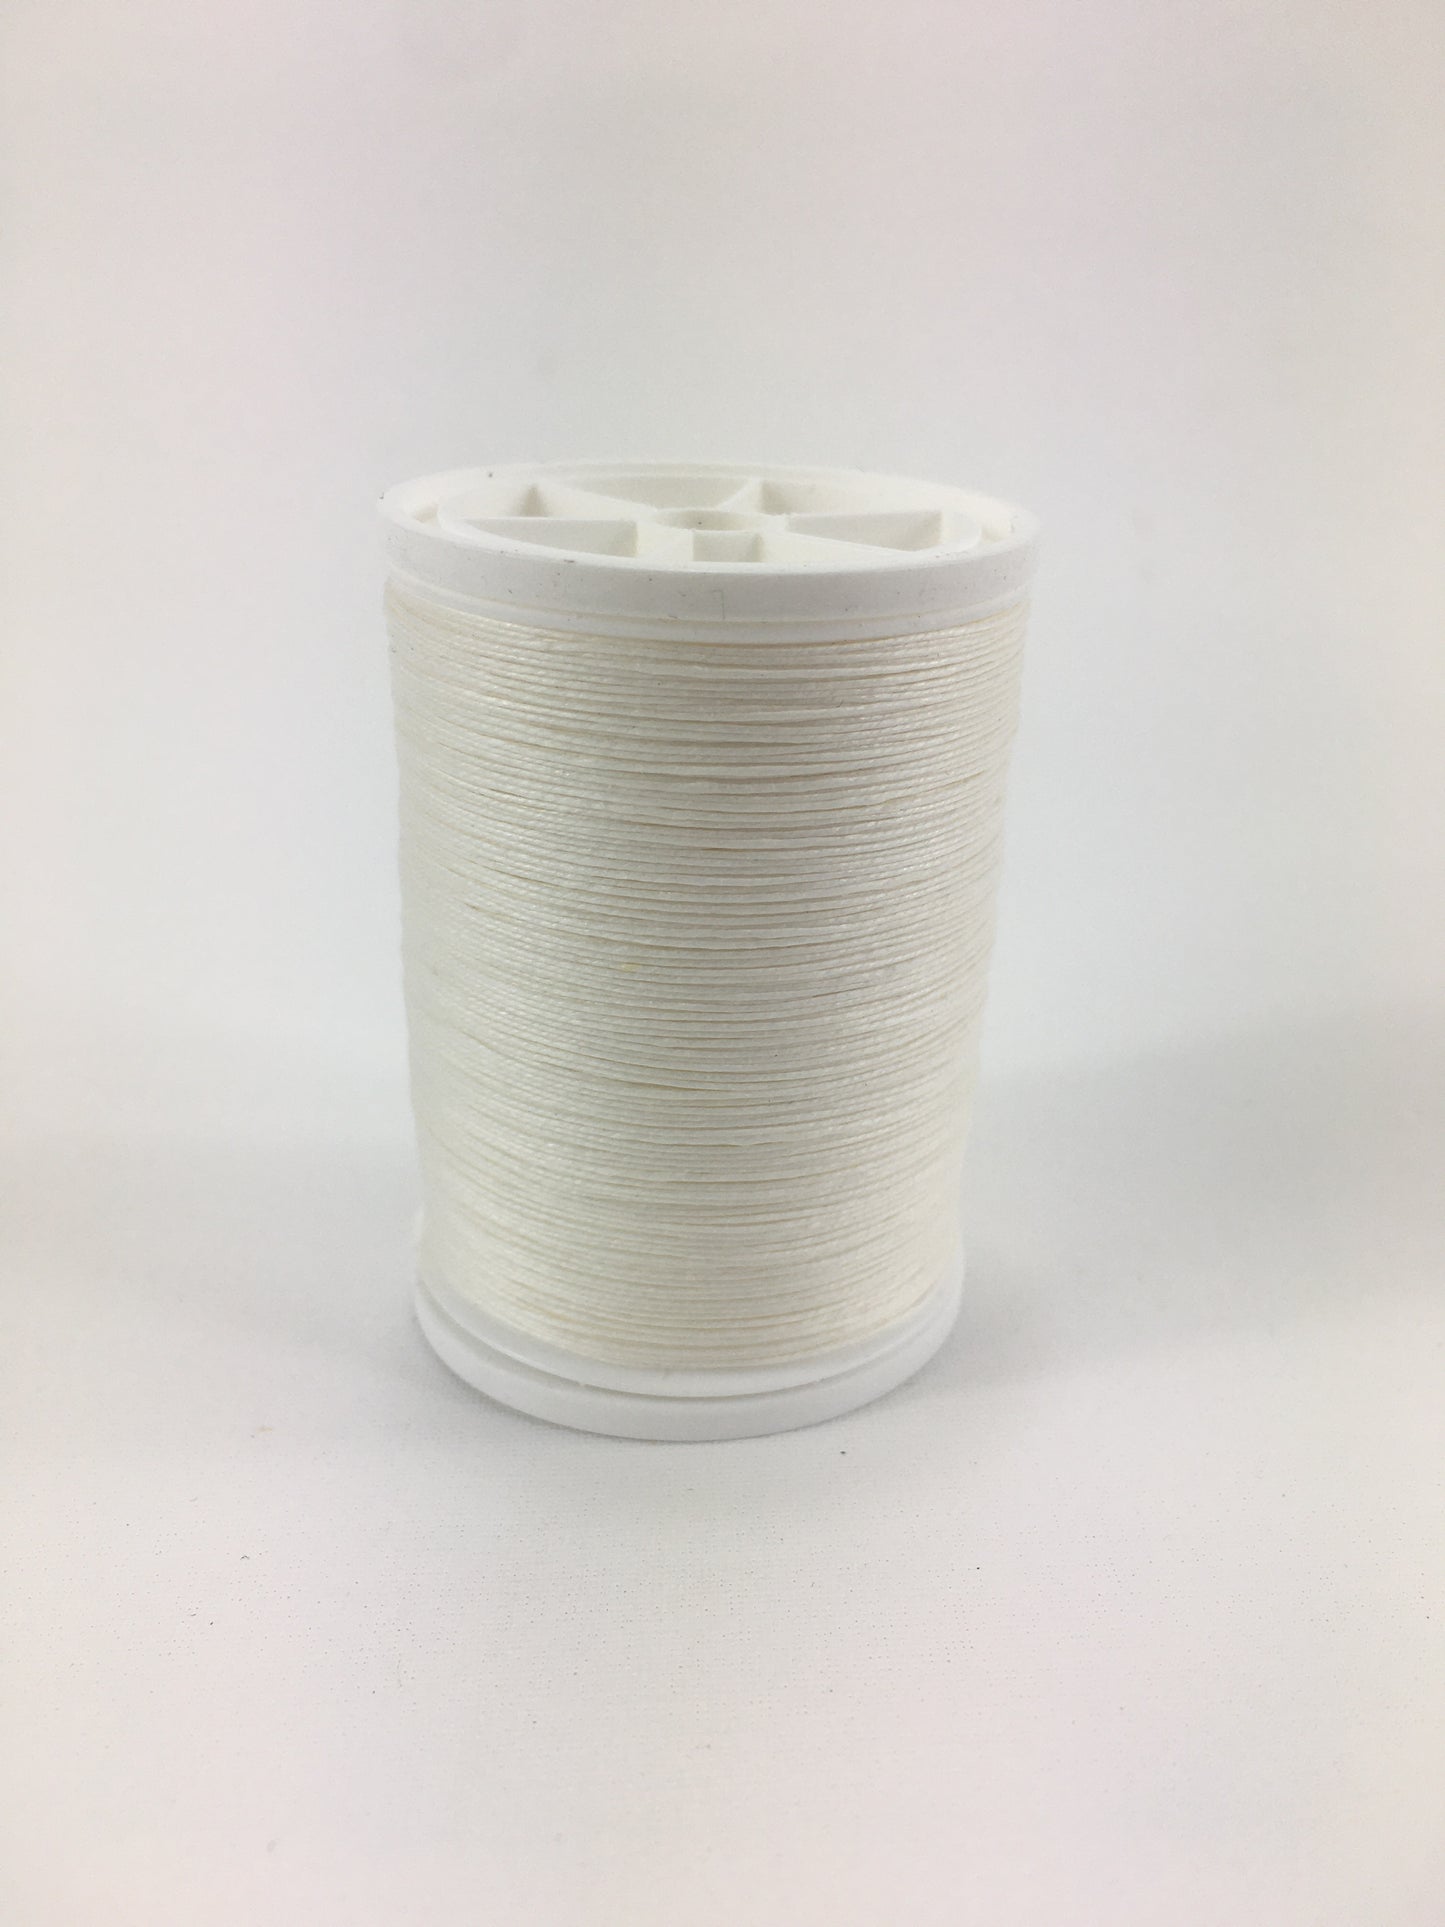 White Natural Linen Thread Spool- 50g per spool- 5 options